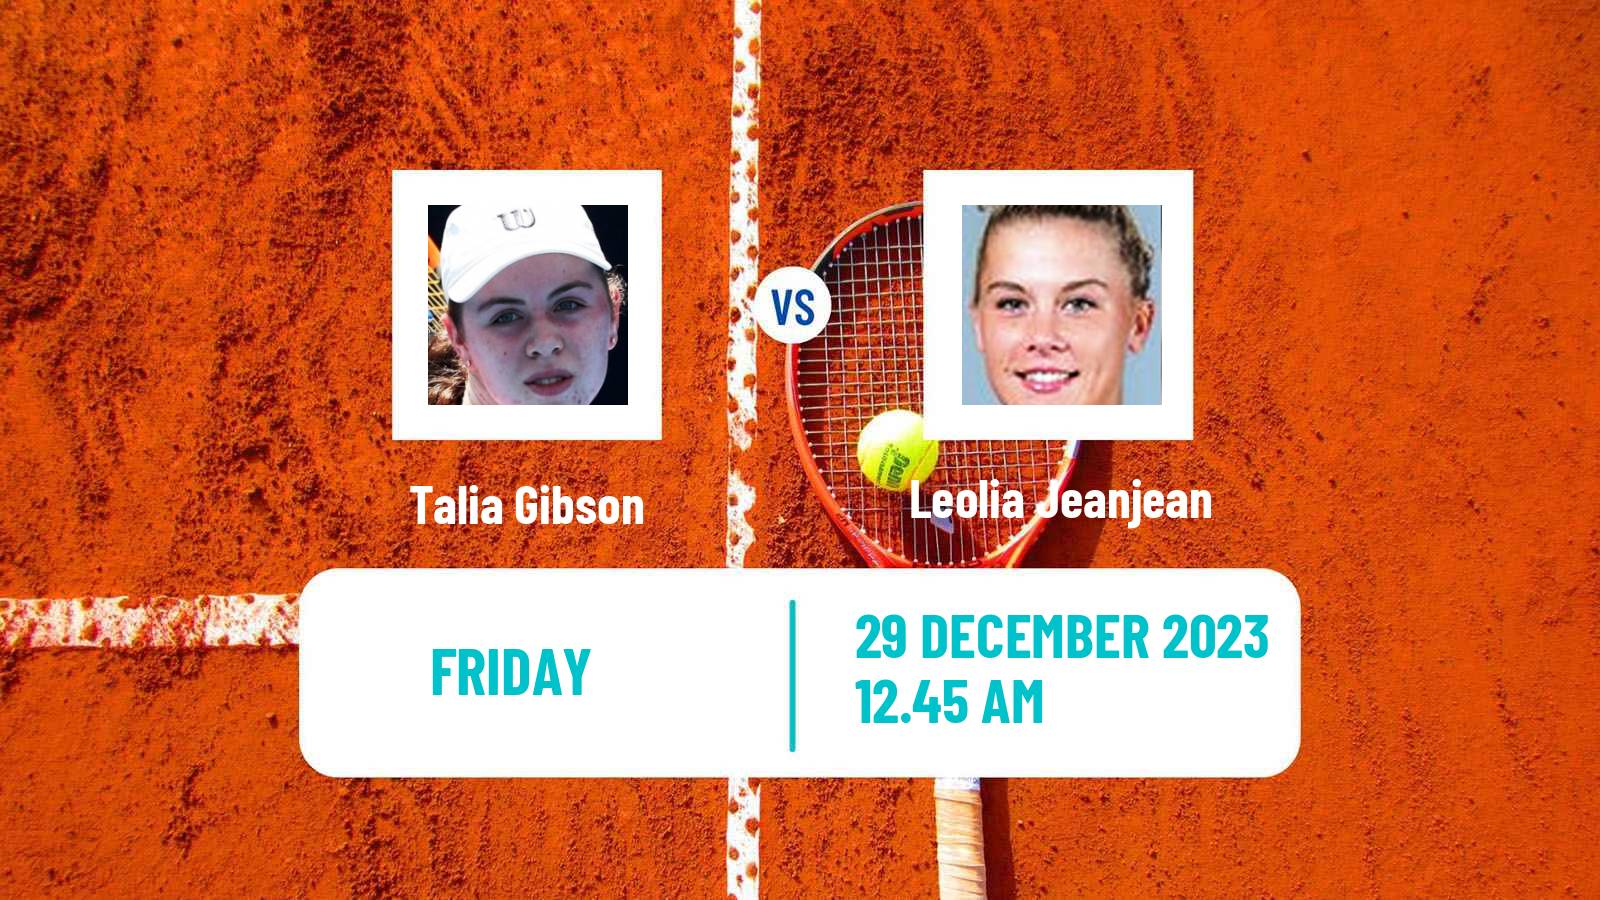 Tennis WTA Brisbane Talia Gibson - Leolia Jeanjean